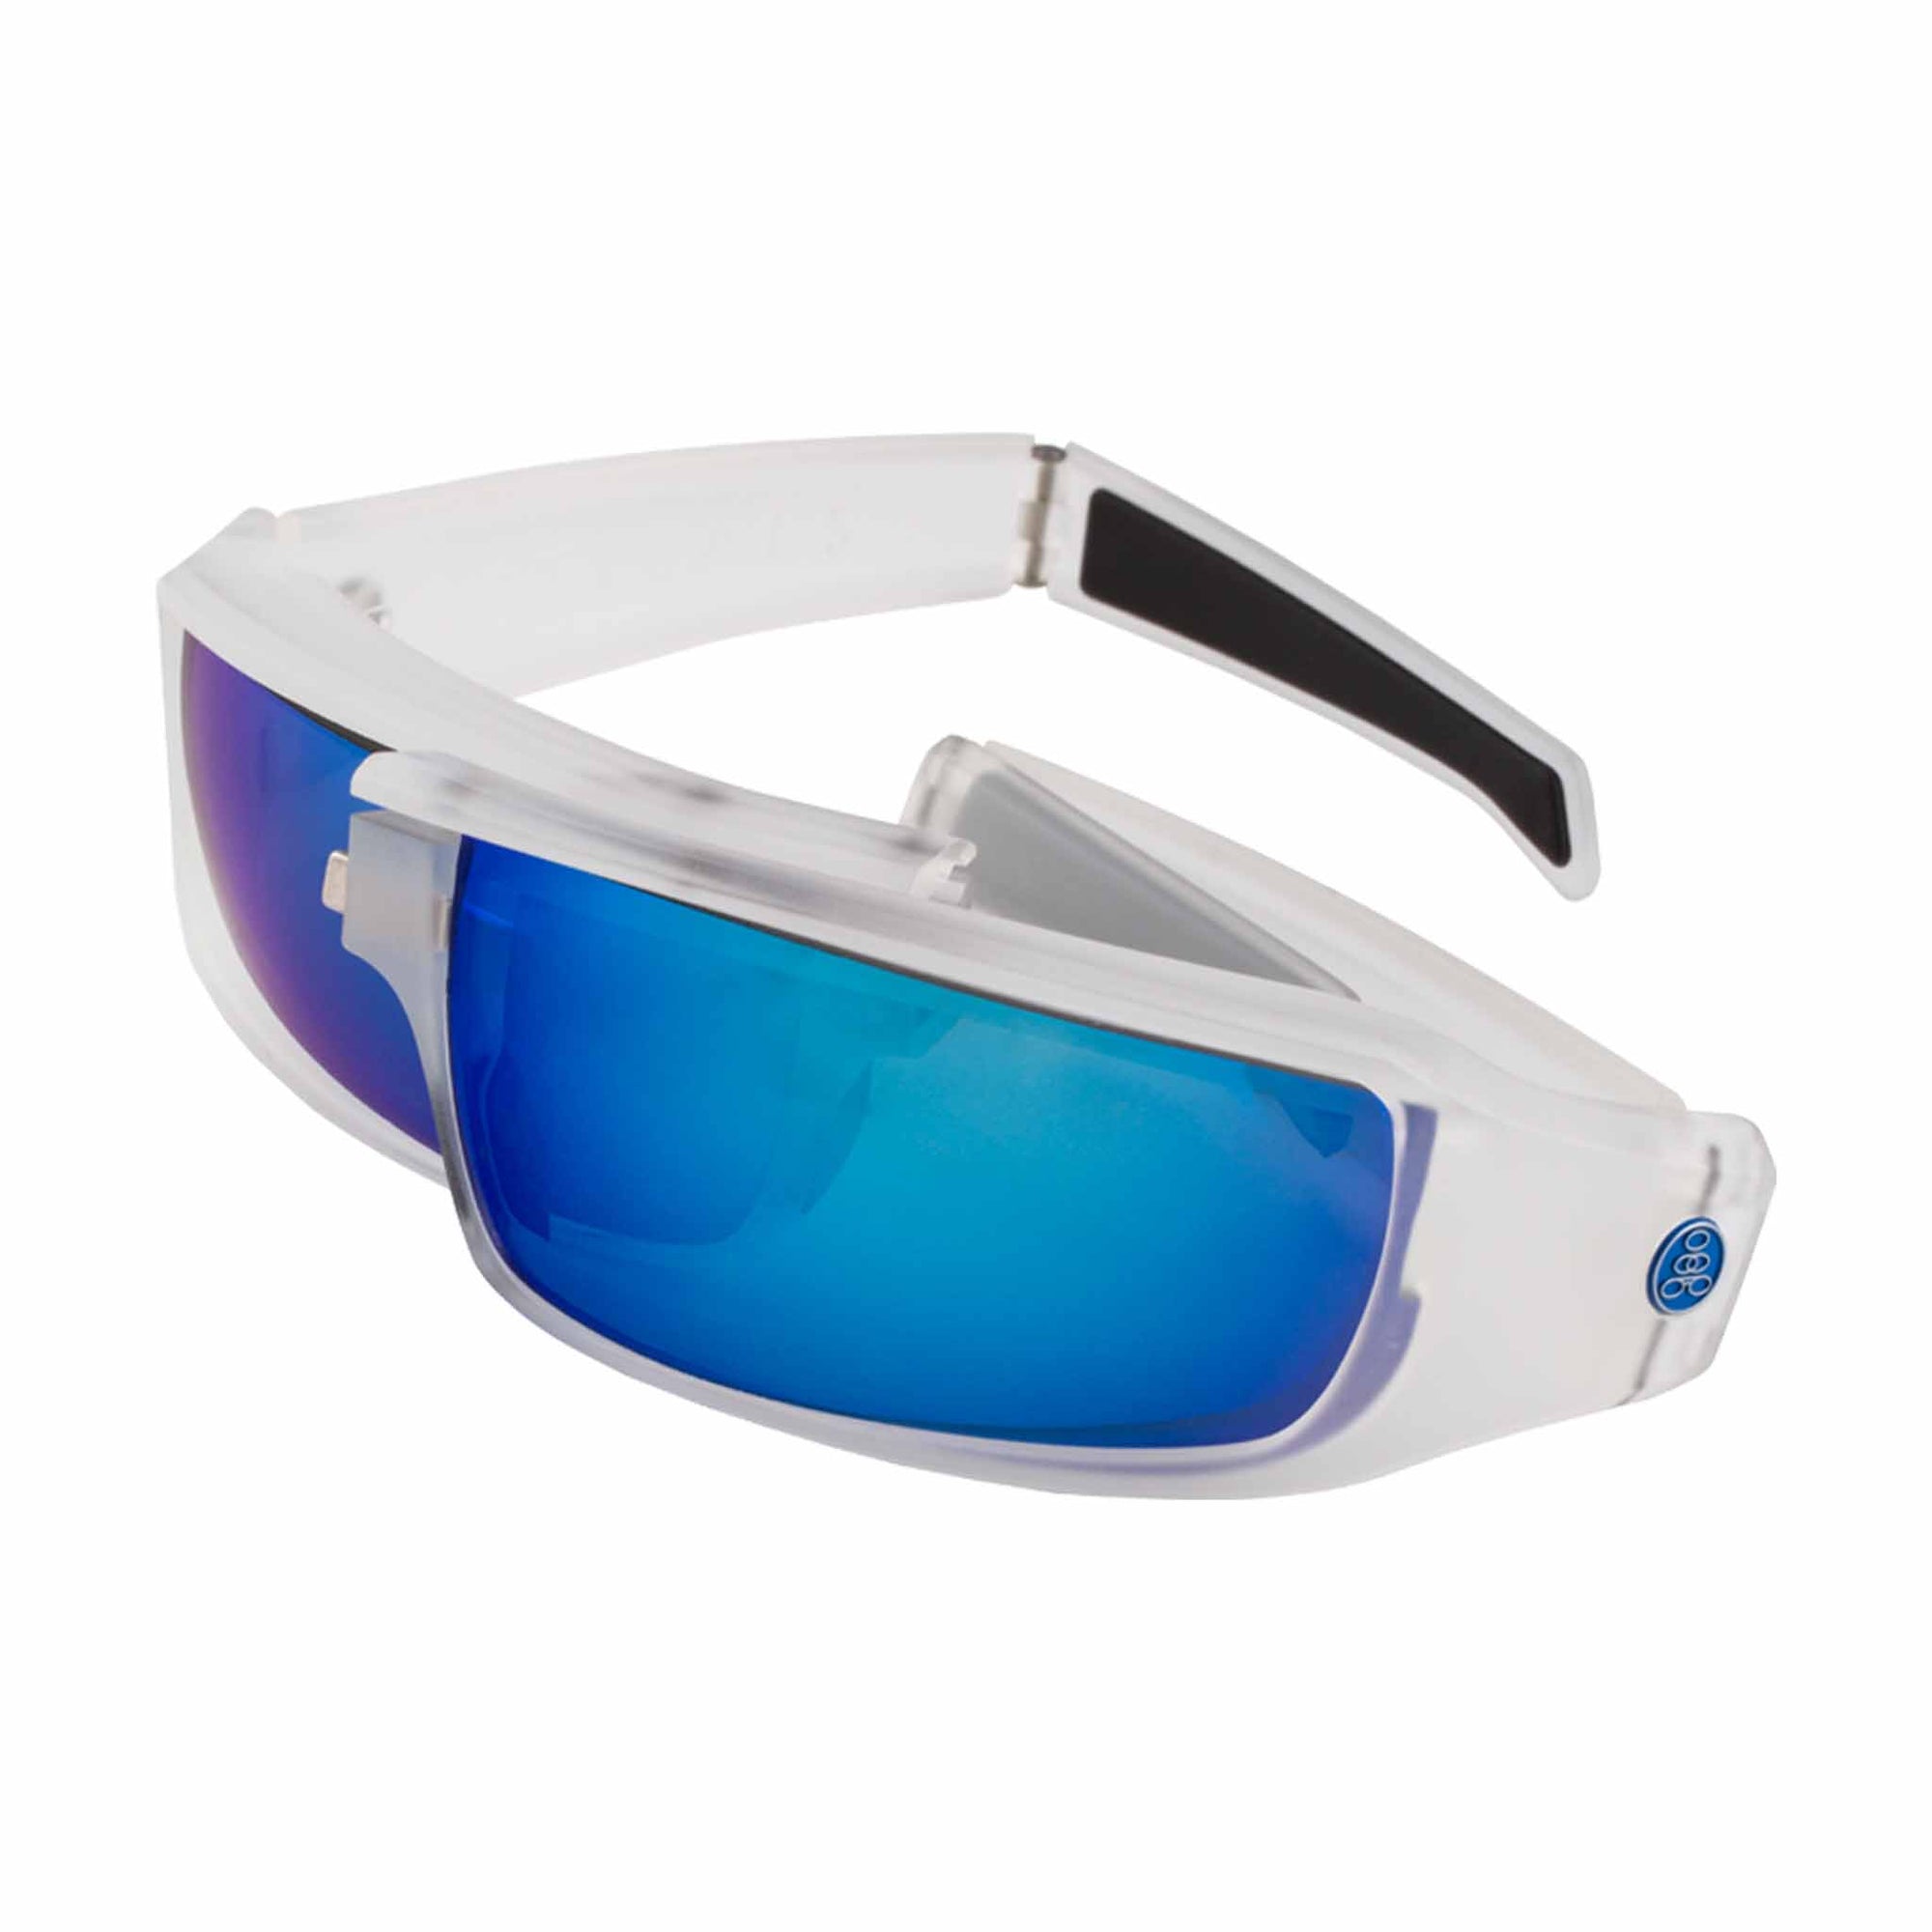 Popticals, Premium Compact Sunglasses, PopSign, 010020-XYUN, Polarized Sunglasses, Matte Crystal Frame, Gray Lenses w/Blue Mirror Finish, Spider View